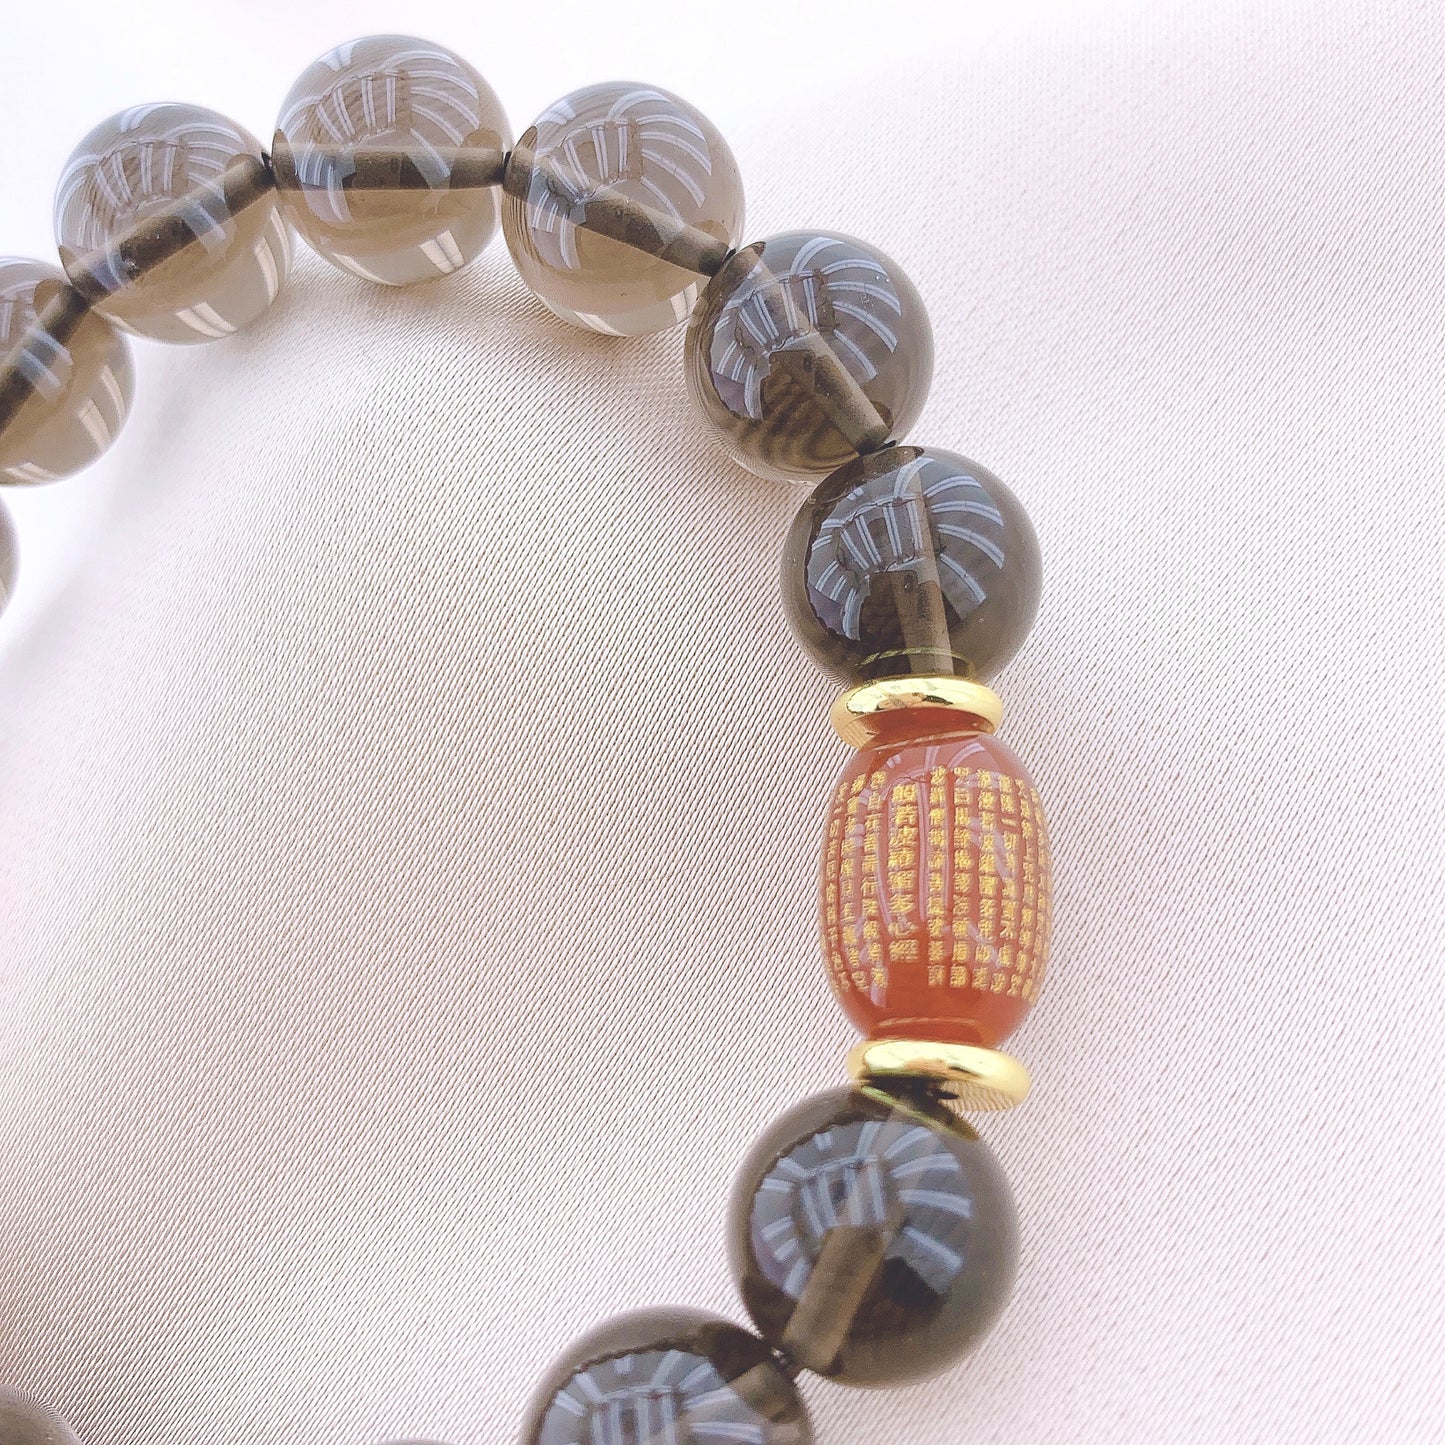 Women's Fashion Tea-coloured Crystal Beads Gemstone Bracelets